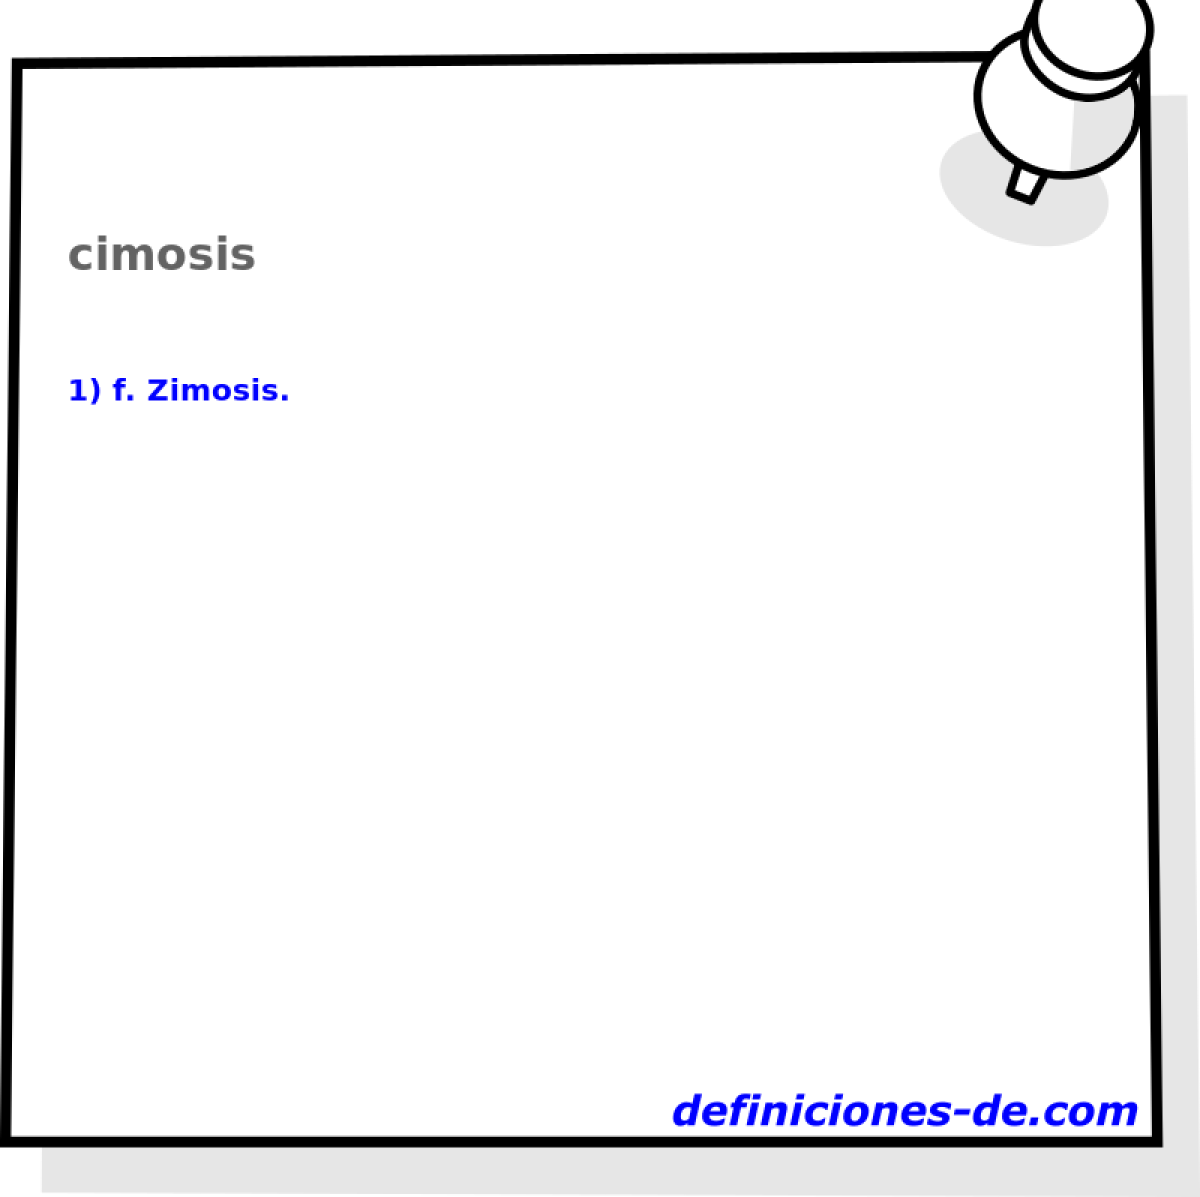 cimosis 